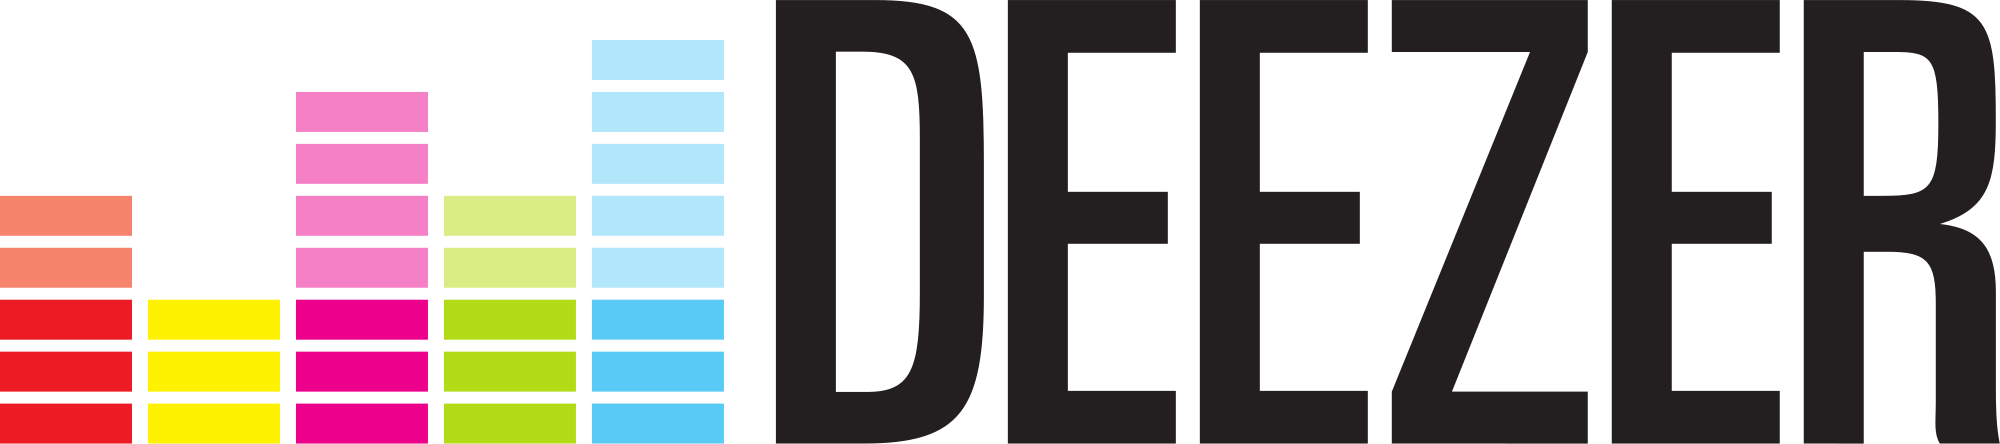 Deezer Logo - File:Deezer logo.svg - Wikimedia Commons